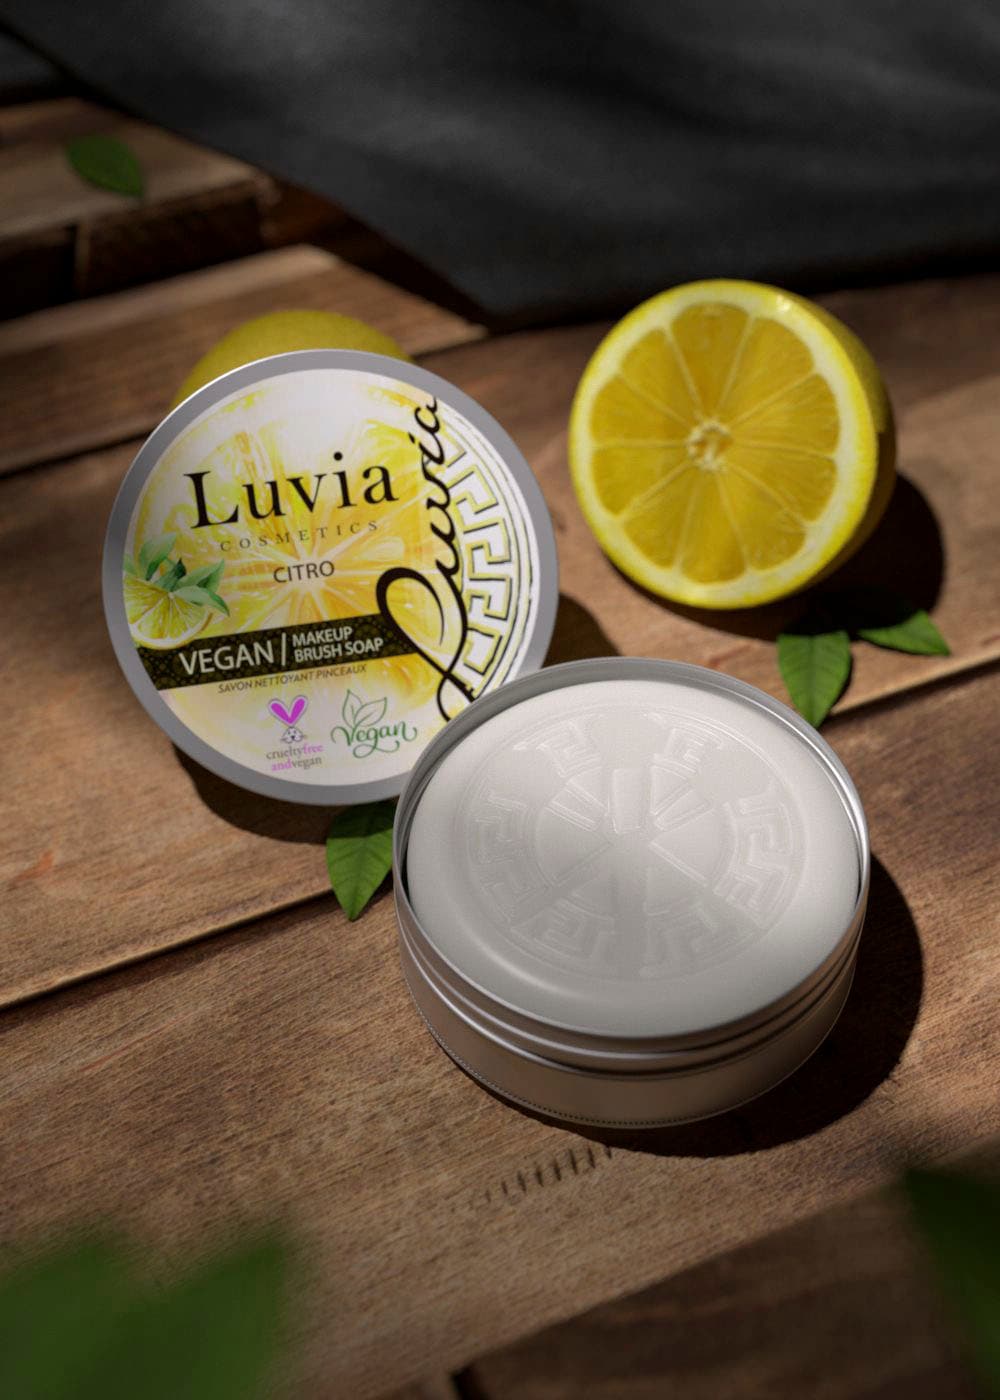 Luvia Cosmetics Pinselseife »The Essential Brush Soap«, vegan